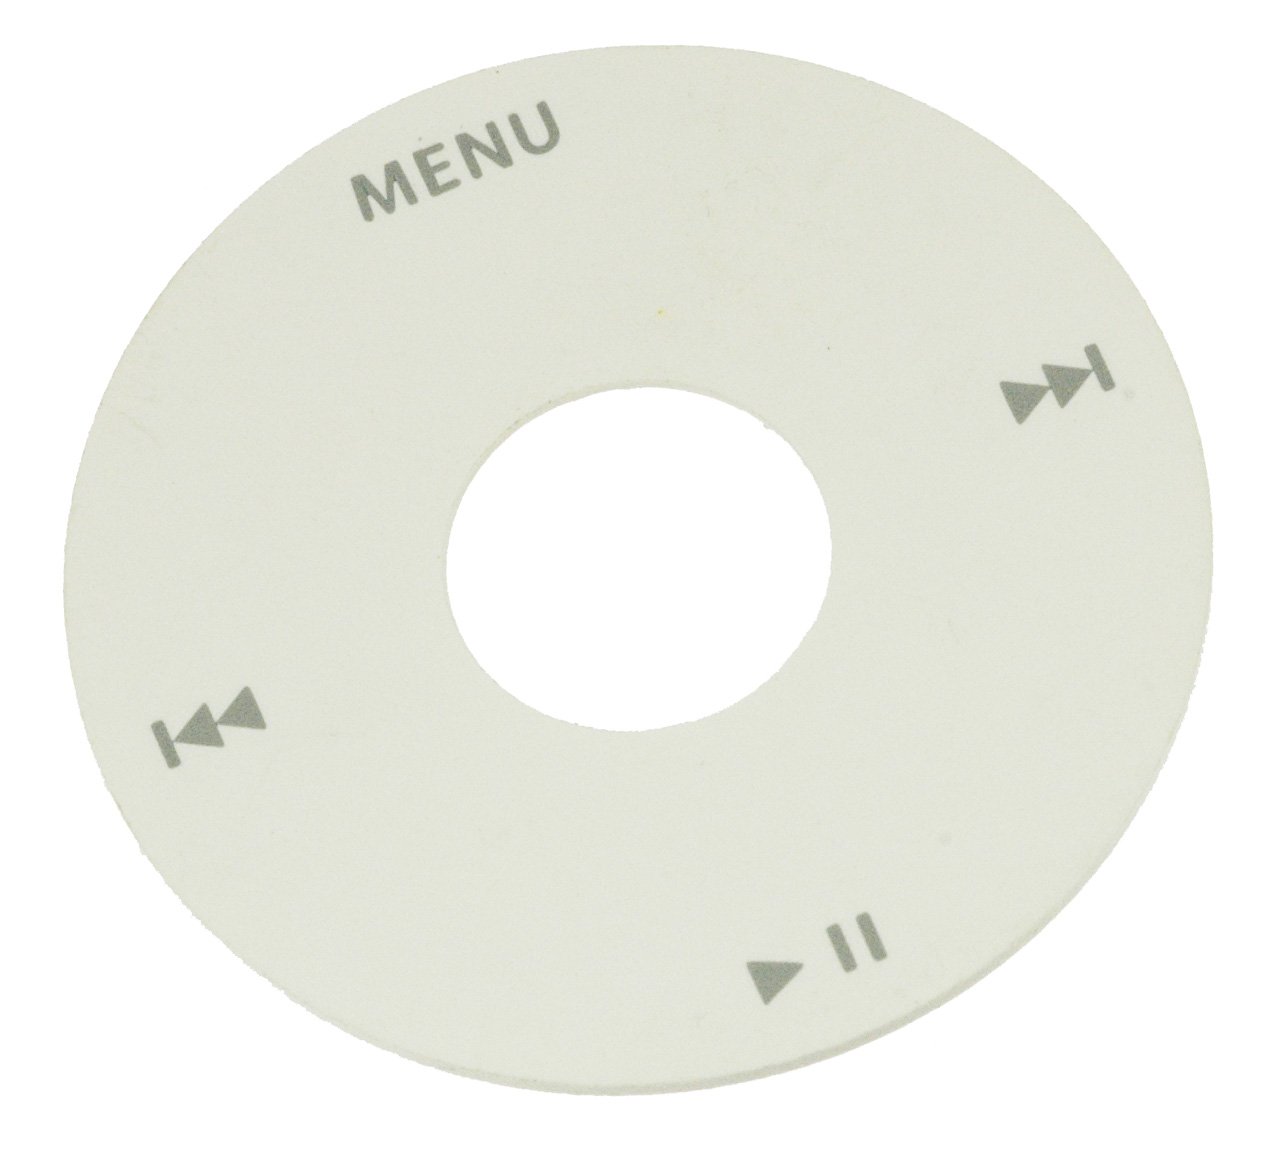 iPod Classic Click Wheel Plastics (Silver)